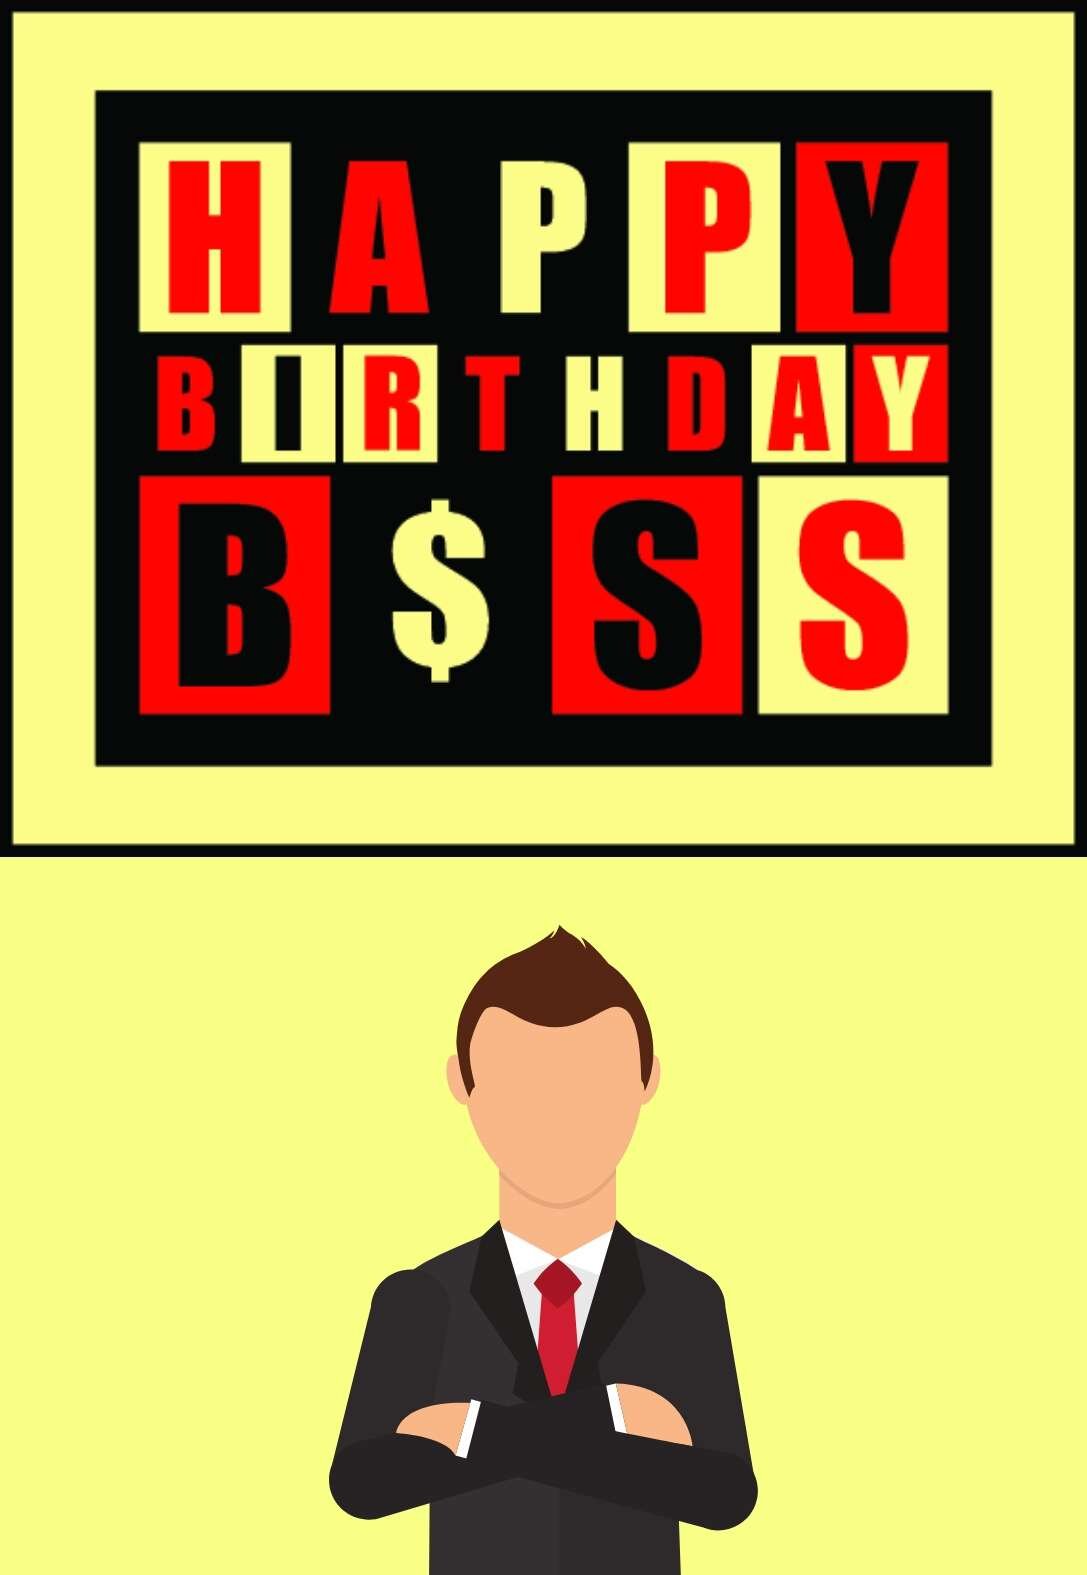 Happy Birthday Boss Card Free Printable